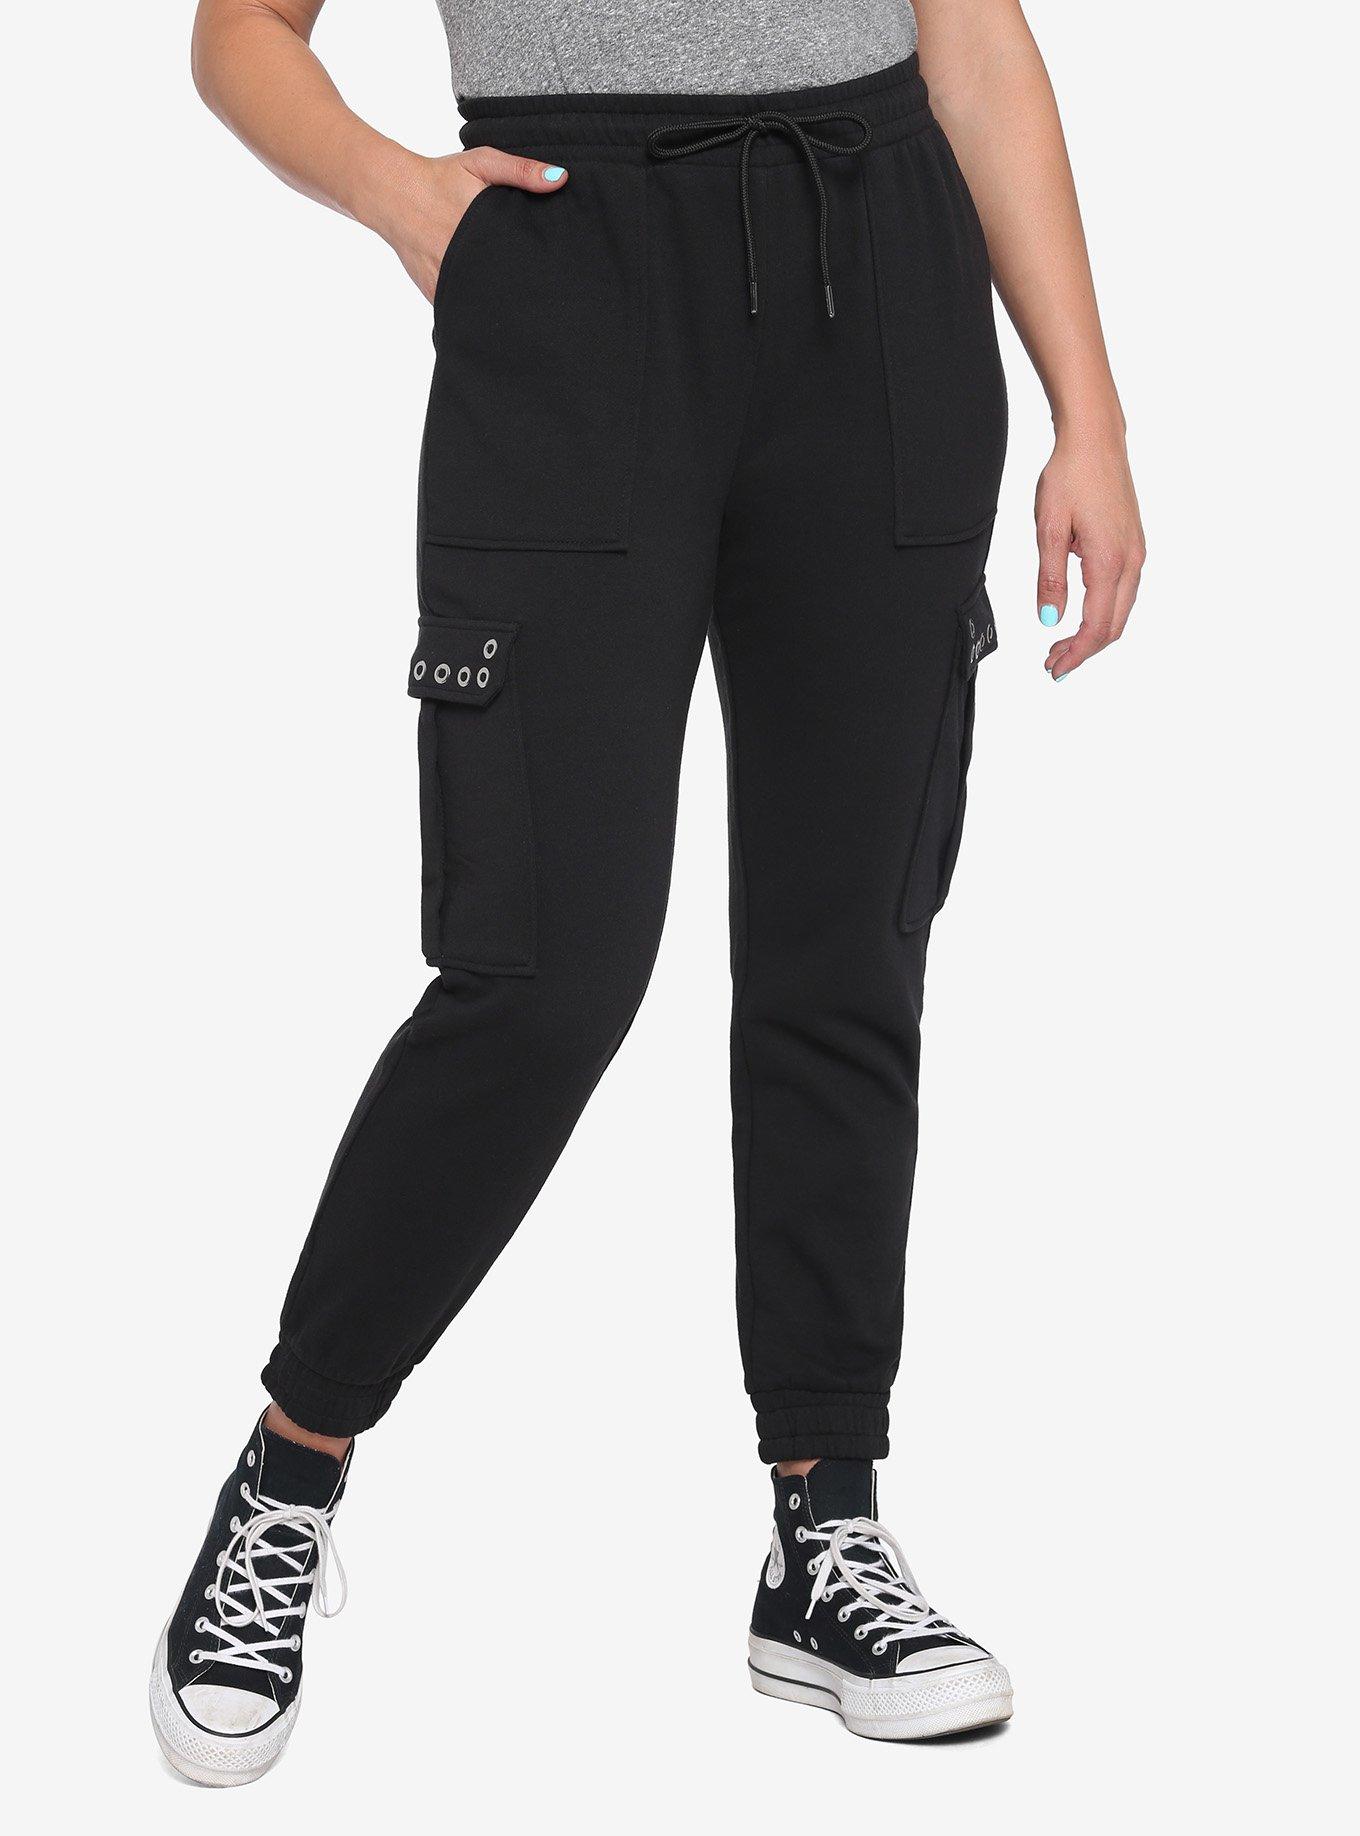 Black Grommet Jogger Pants, BLACK, hi-res